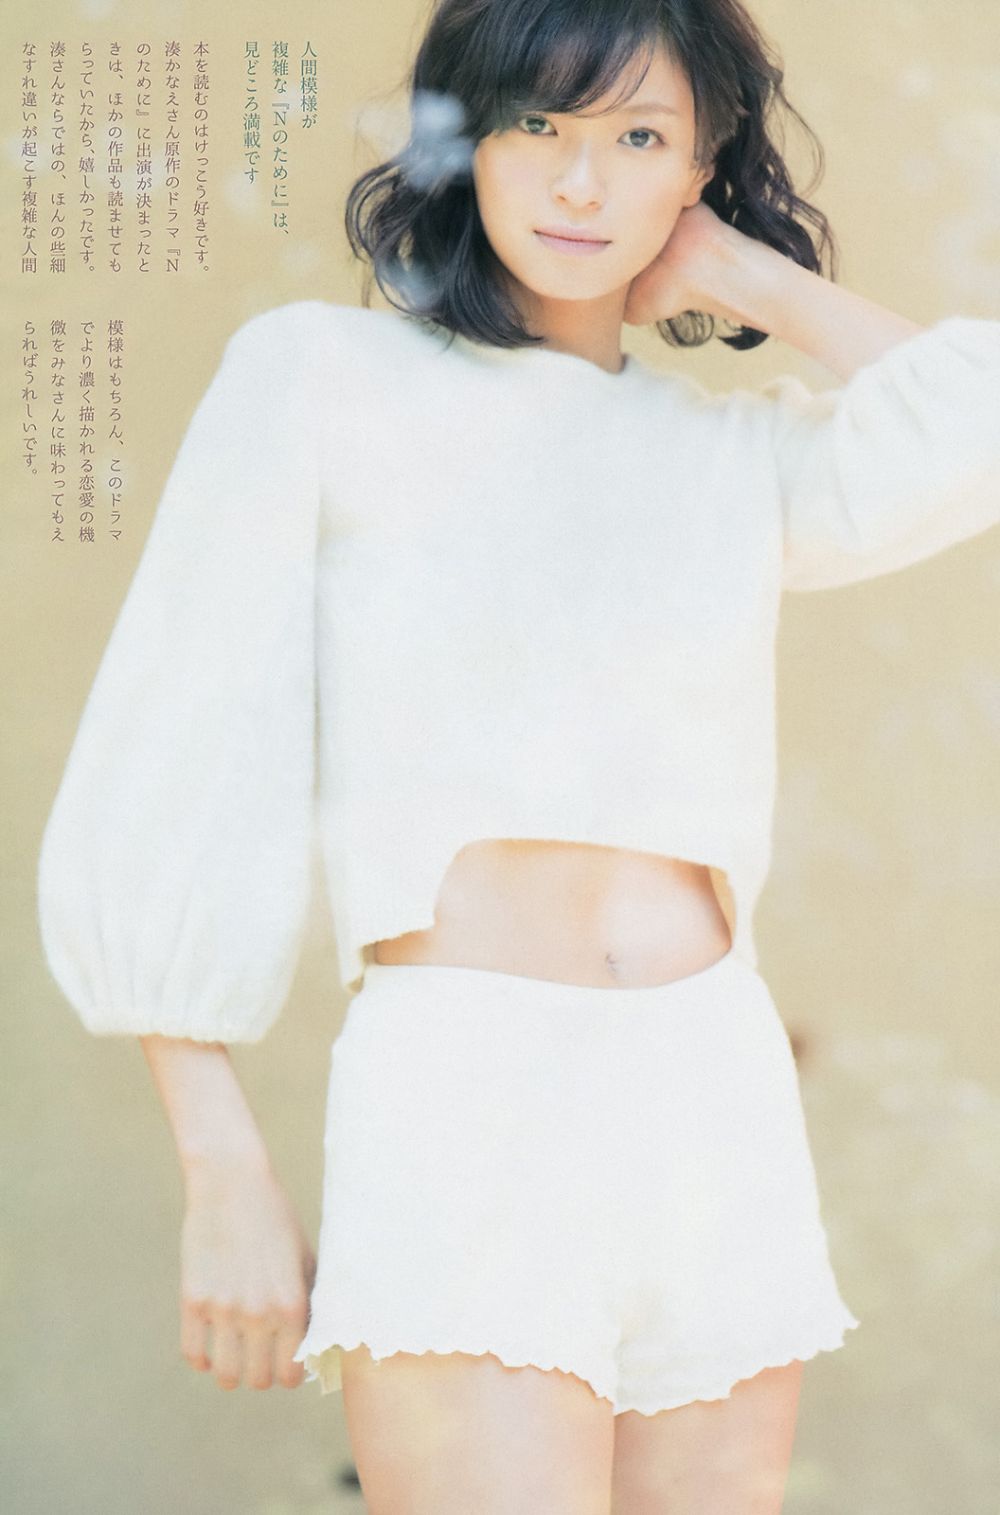 Nana Eikura Sexy and Hottest Photos , Latest Pics